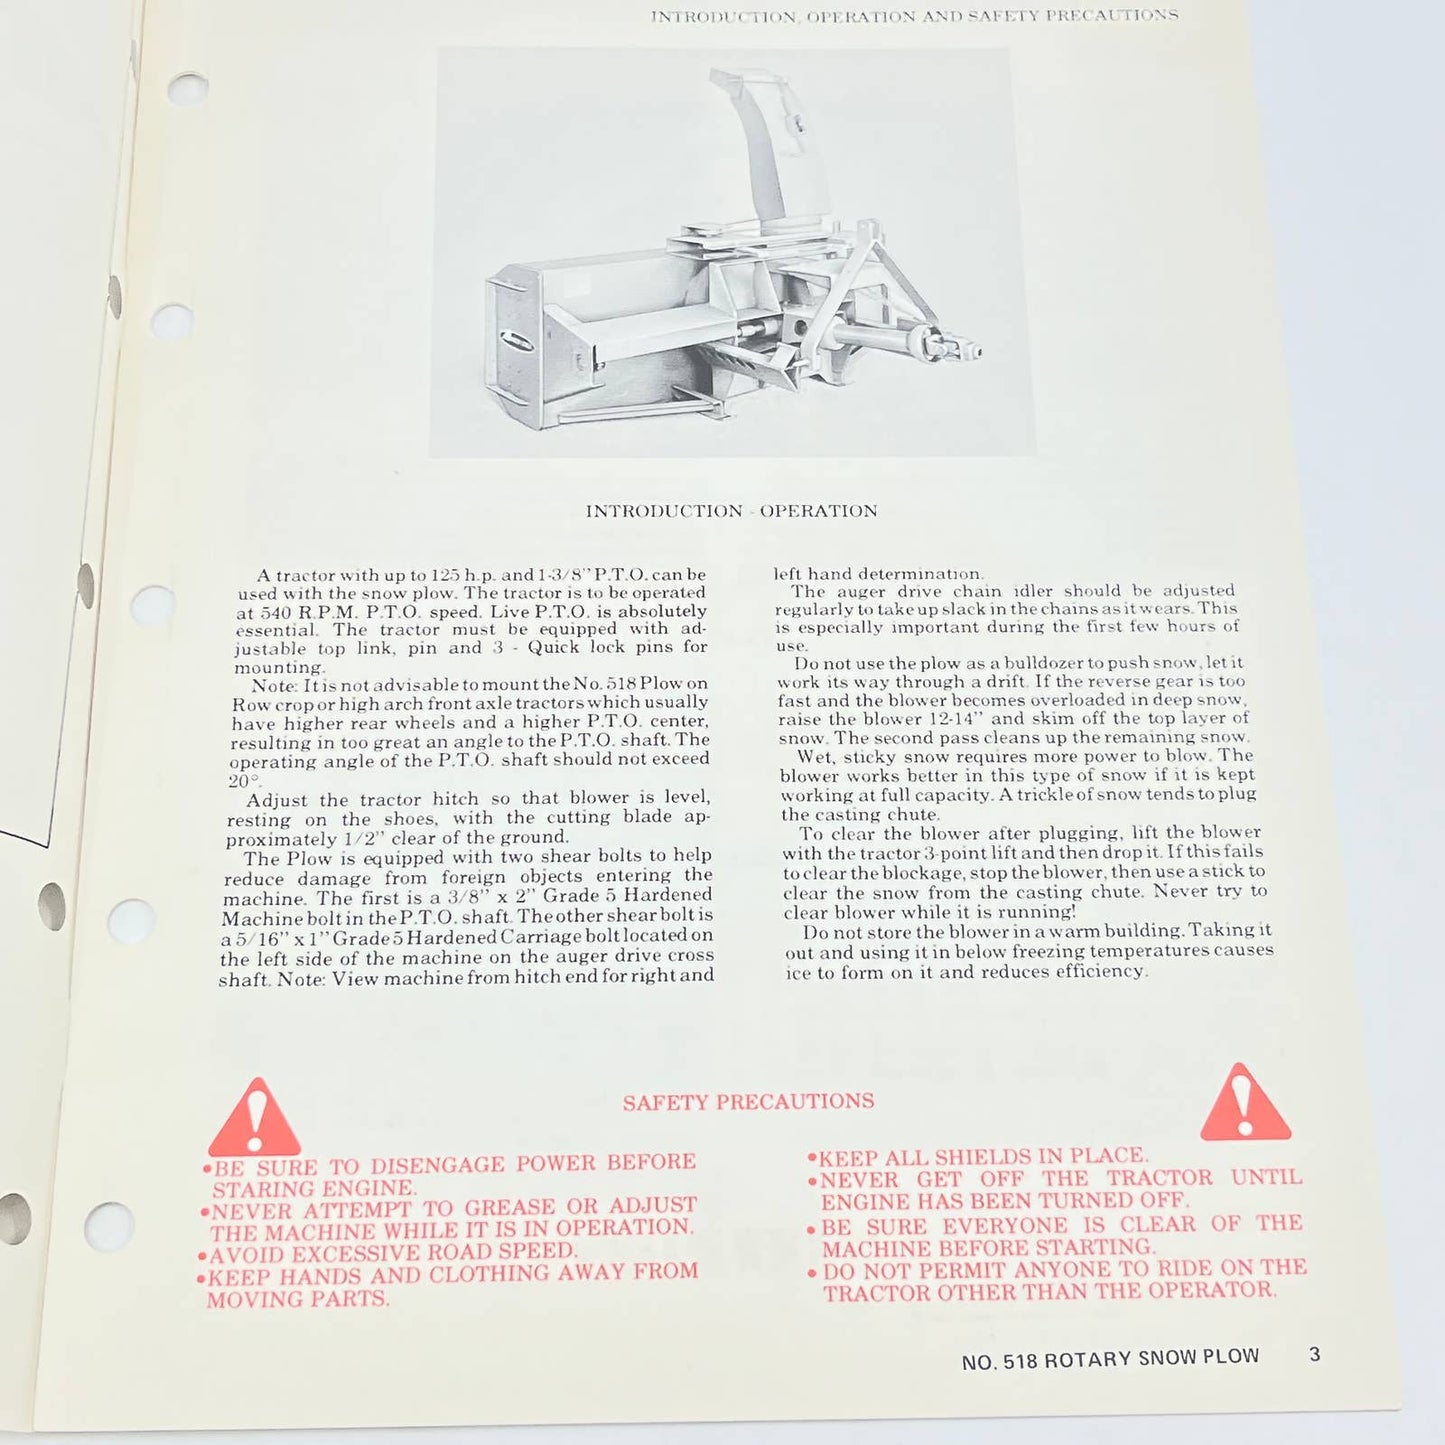 Original 1976 New Idea No. 518 Three Point Hitch 92" Rotary Snow Plow Manual TB9